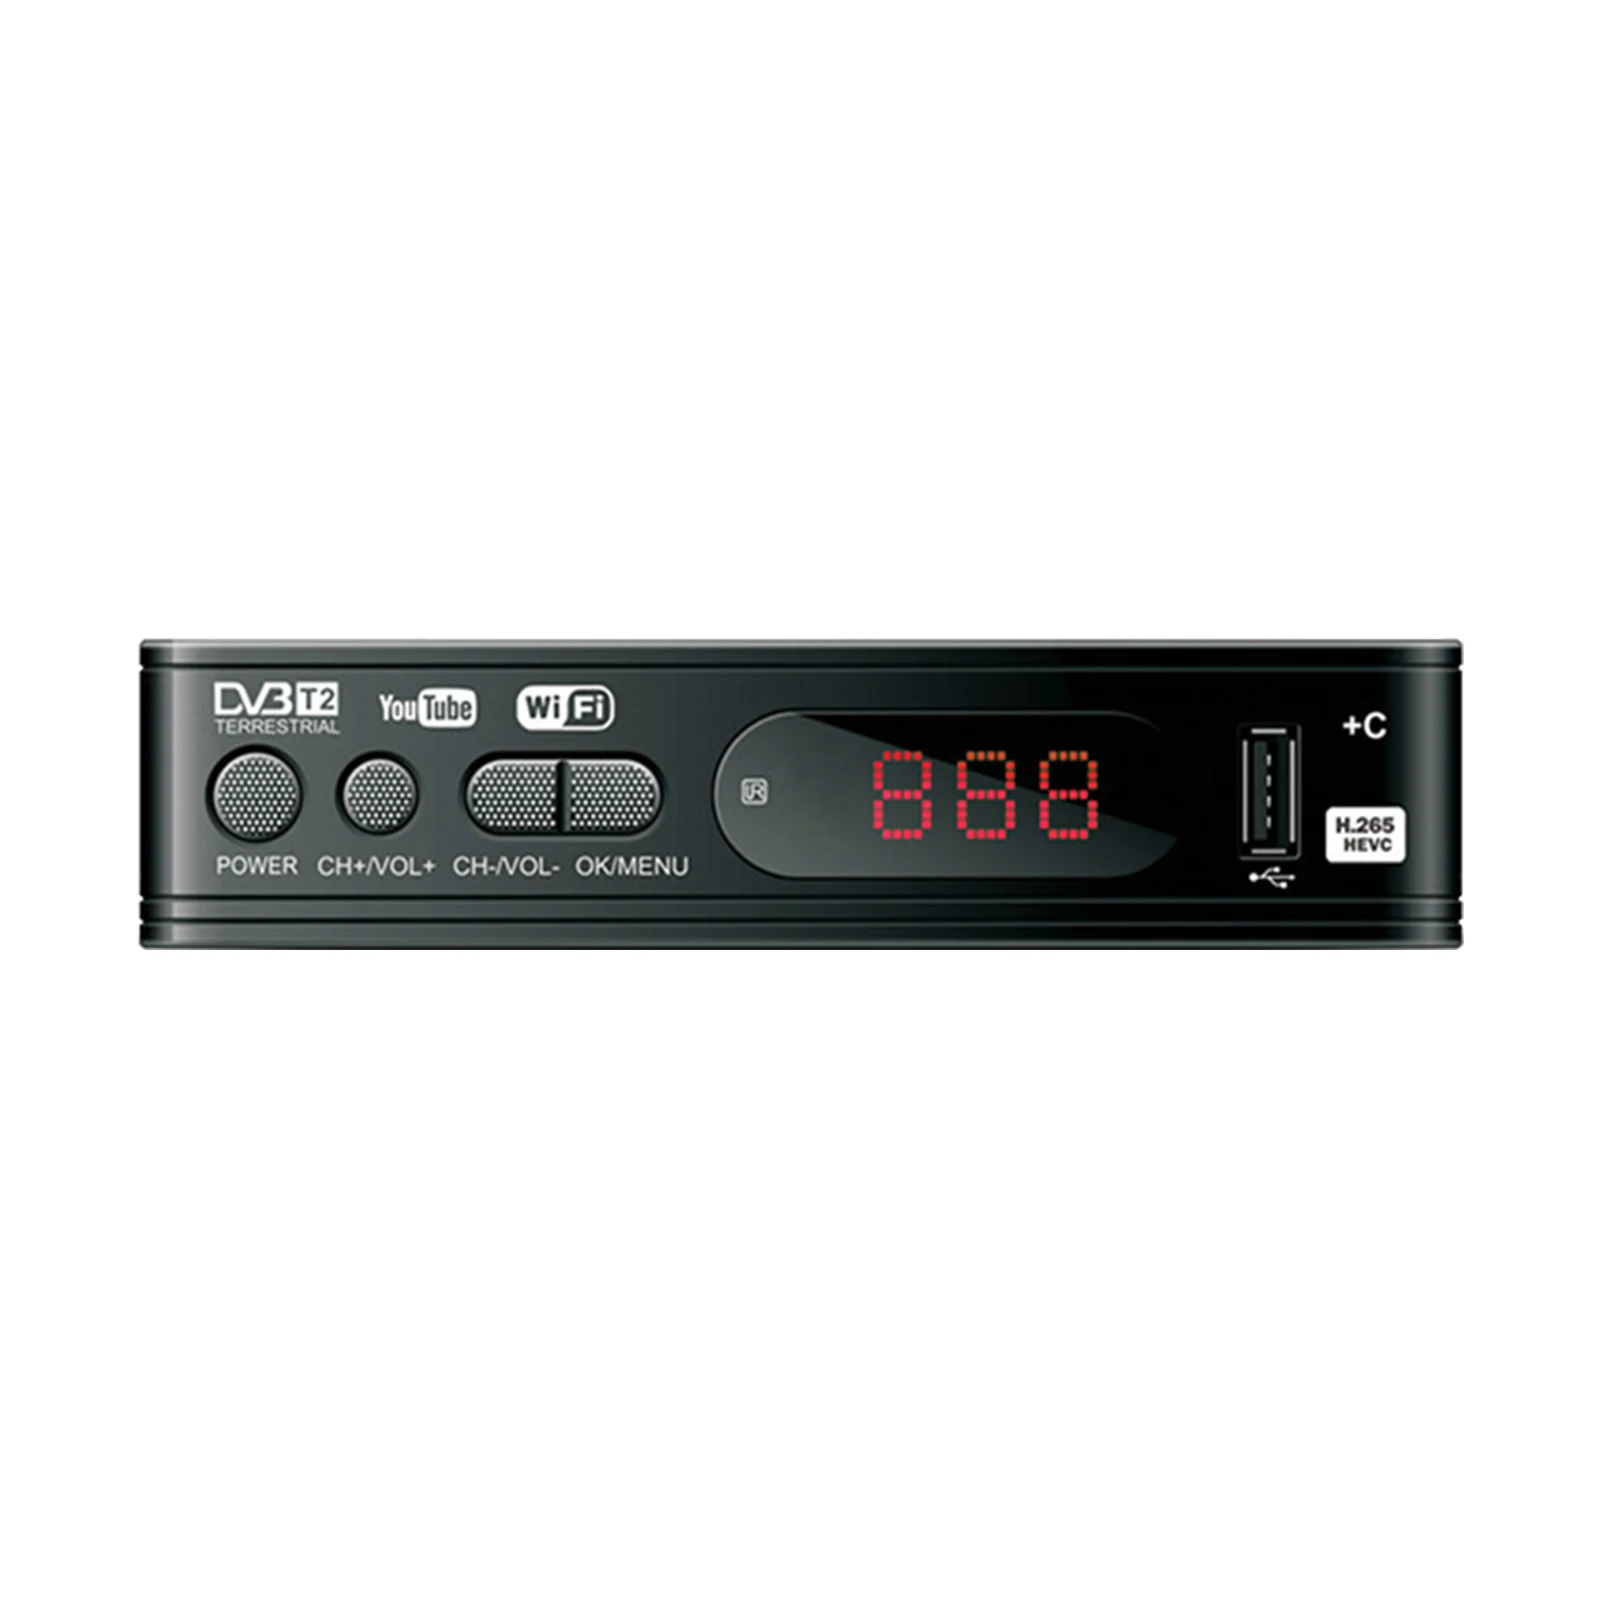 

ТВ-Приставка Smart USB2.0 Wifi PVR EPG Decorder HD 1080P видео H.265 DVB-T2 приемник тюнер цифровой конвертер ТВ-приставка